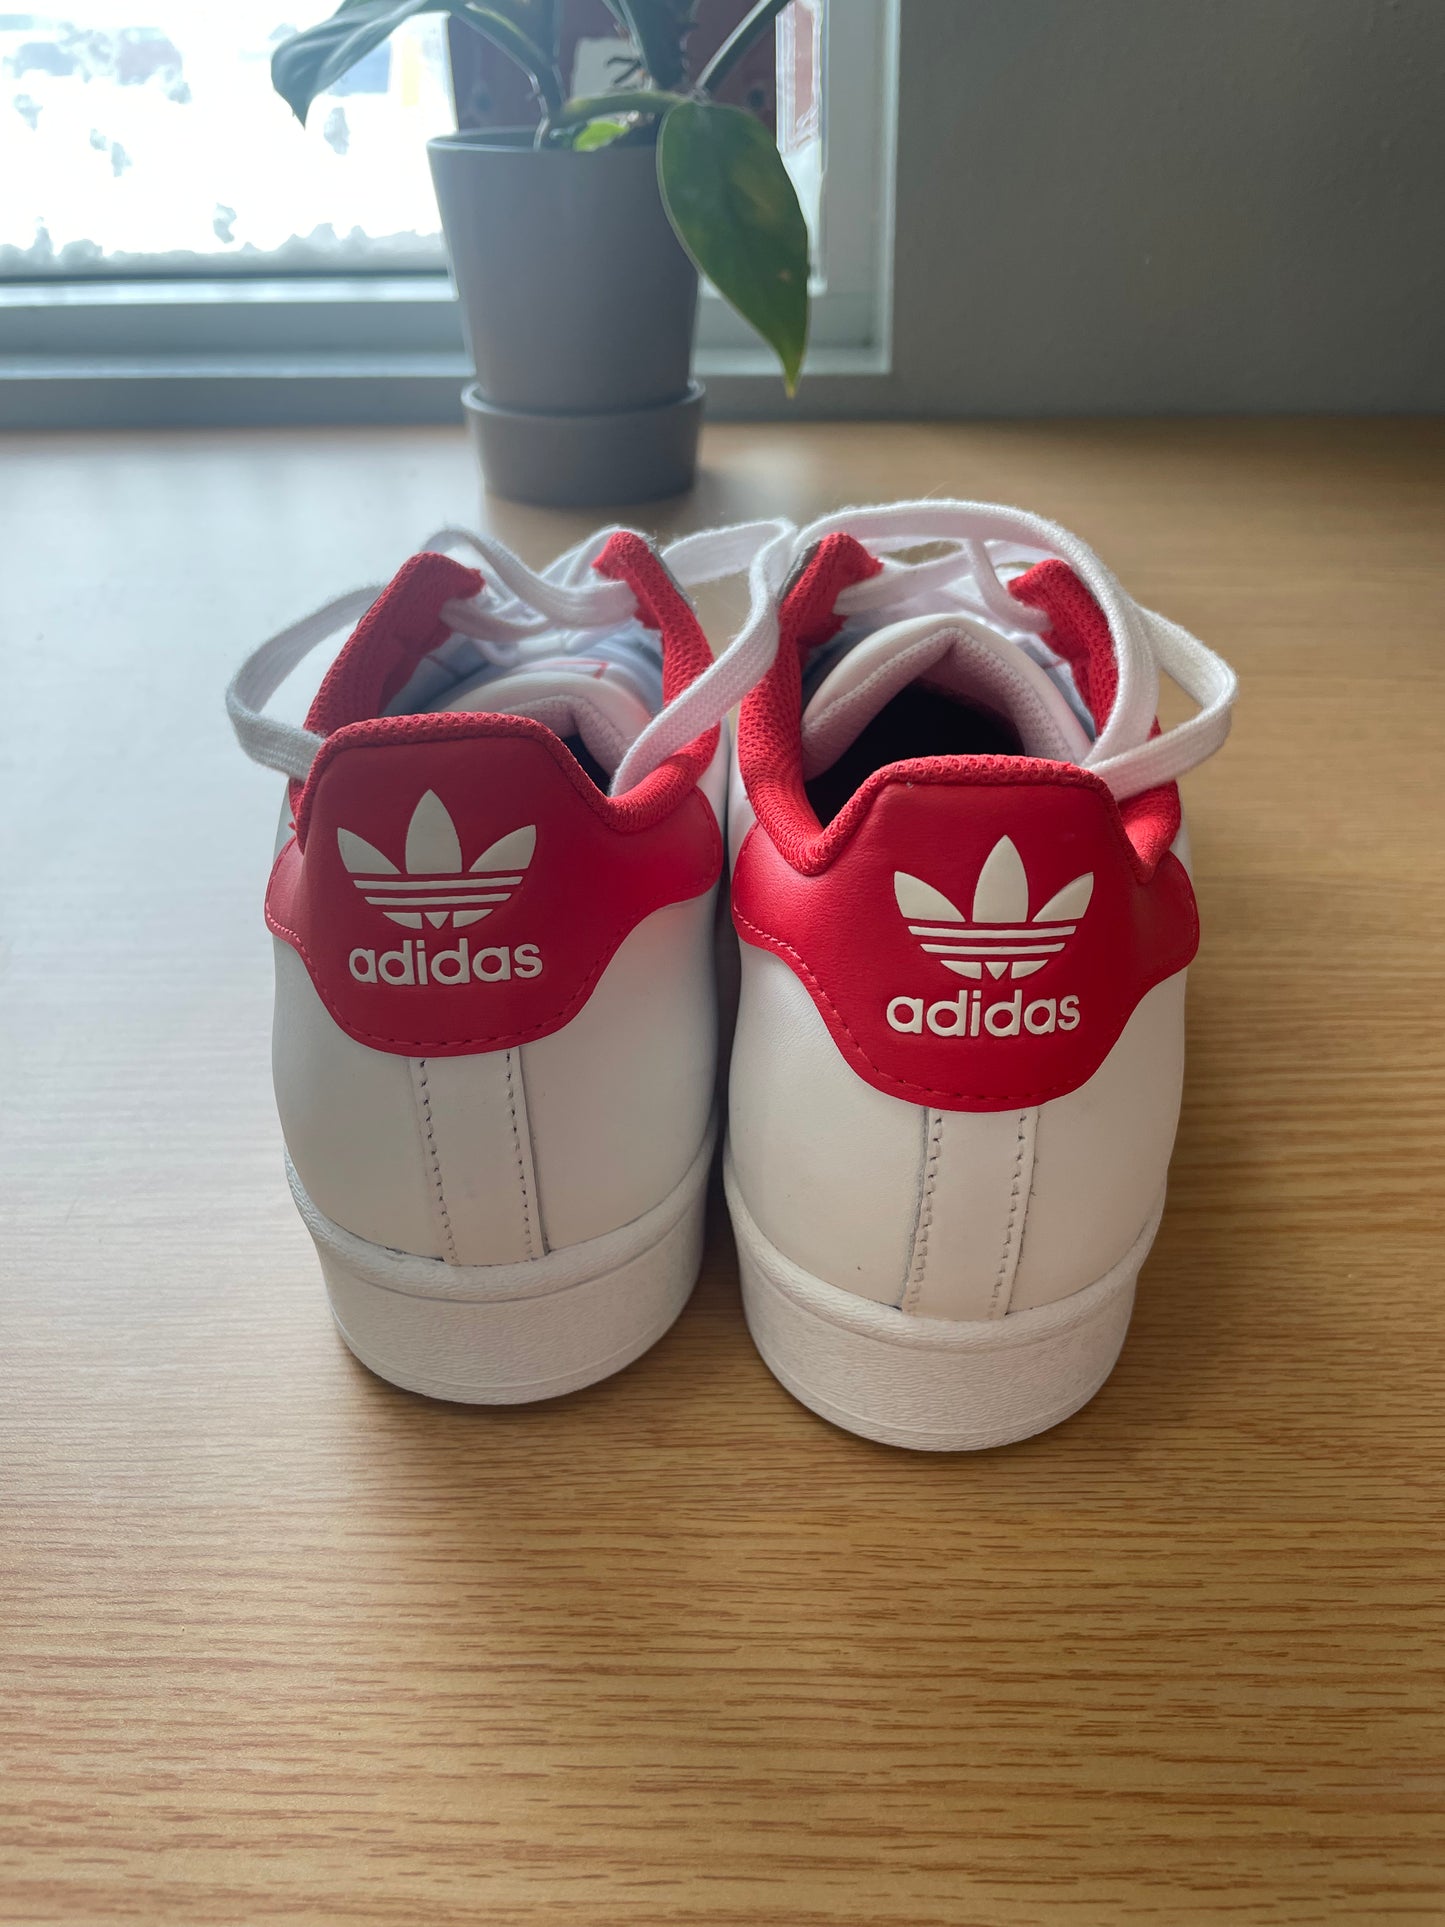 Adidas "Superstar" Sneaker